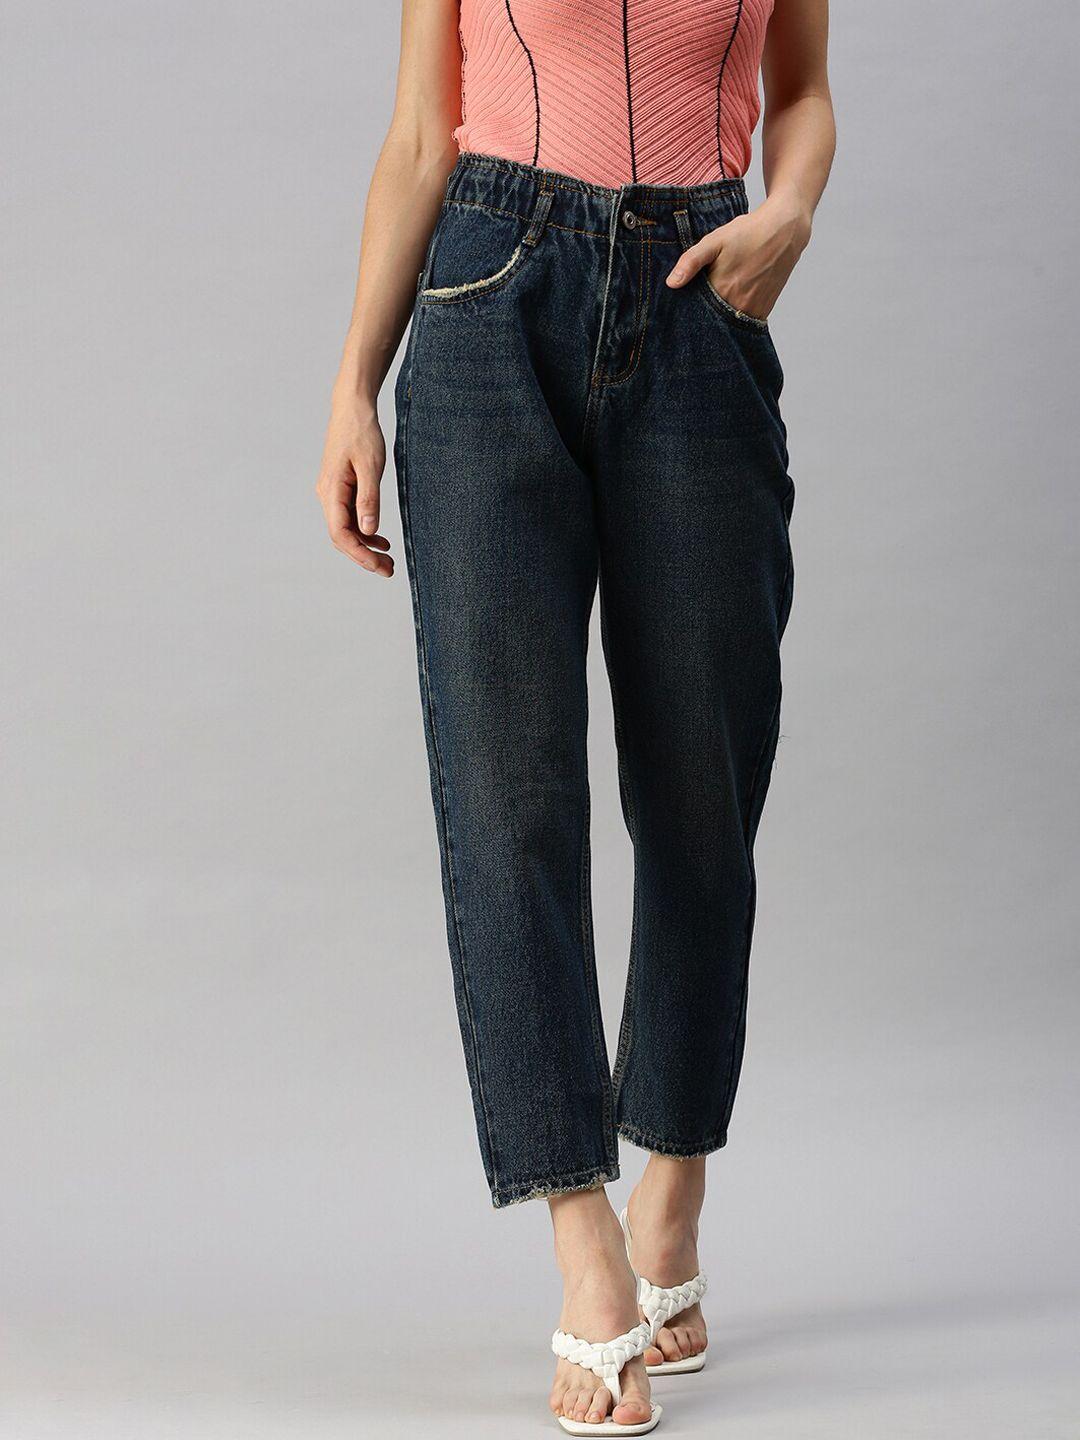 showoff women blue jean high-rise jeans